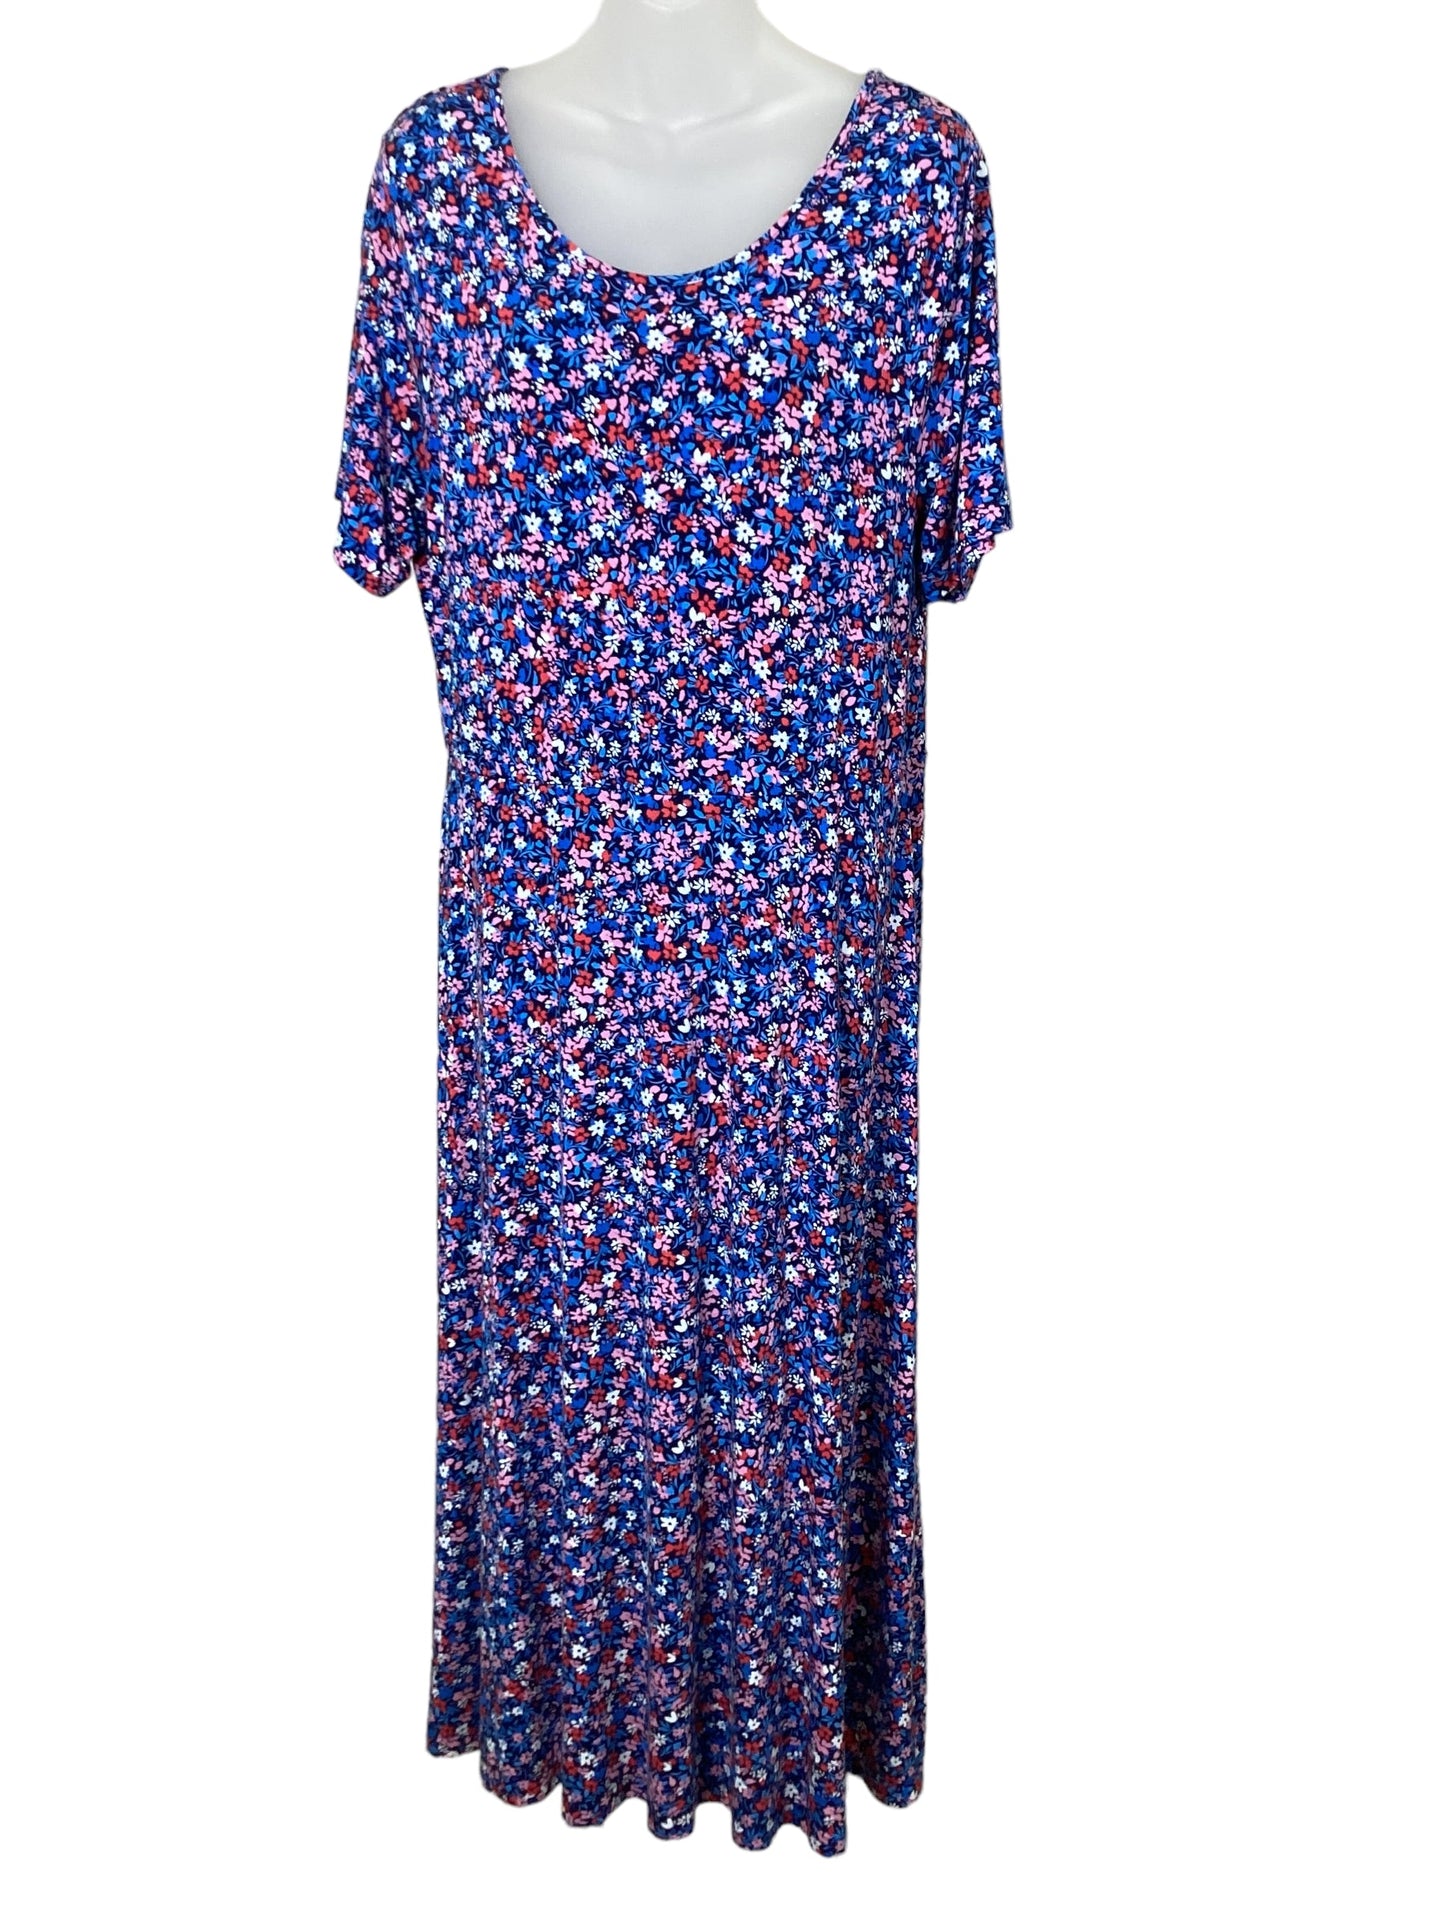 Dress Casual Maxi By Draper James  Size: L